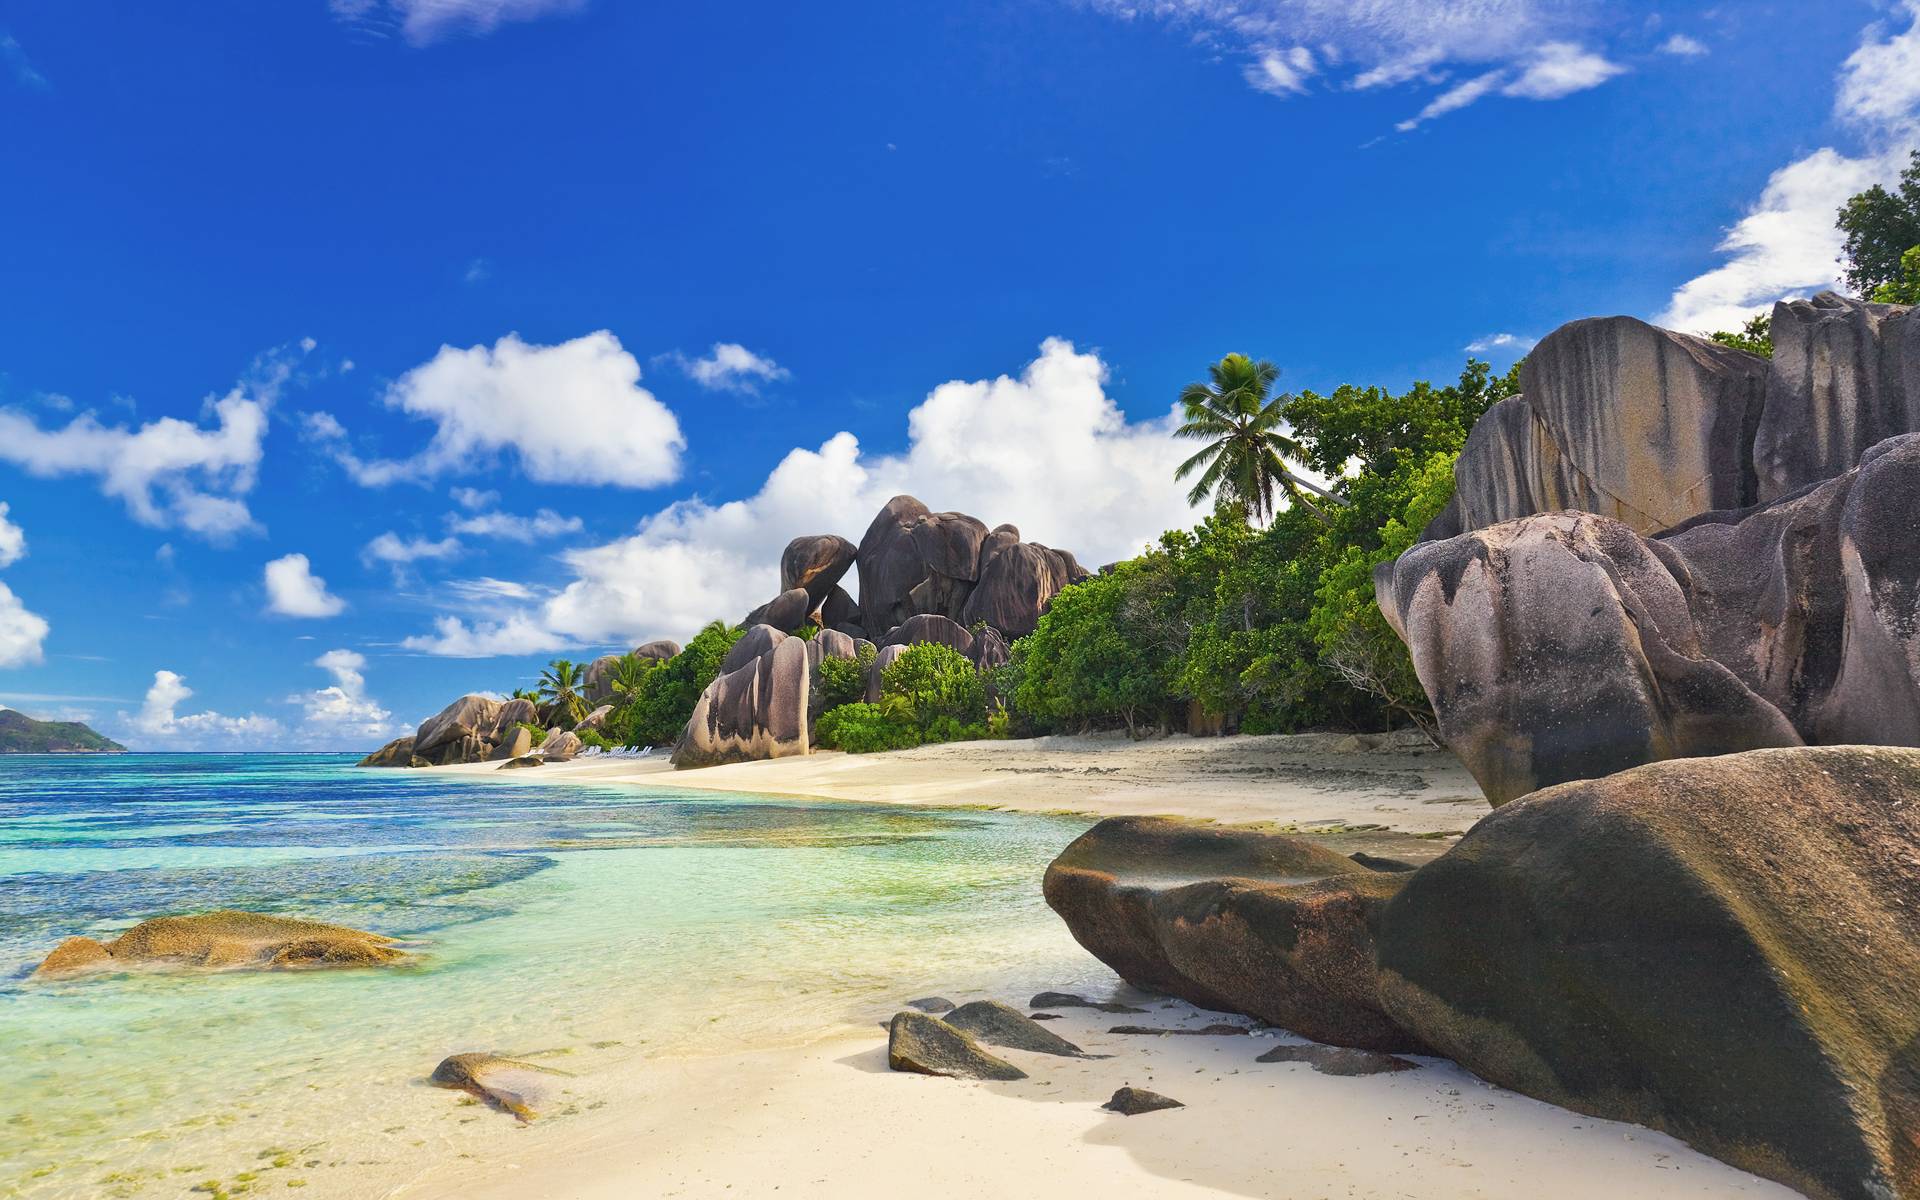 سیشل (Seychelles)